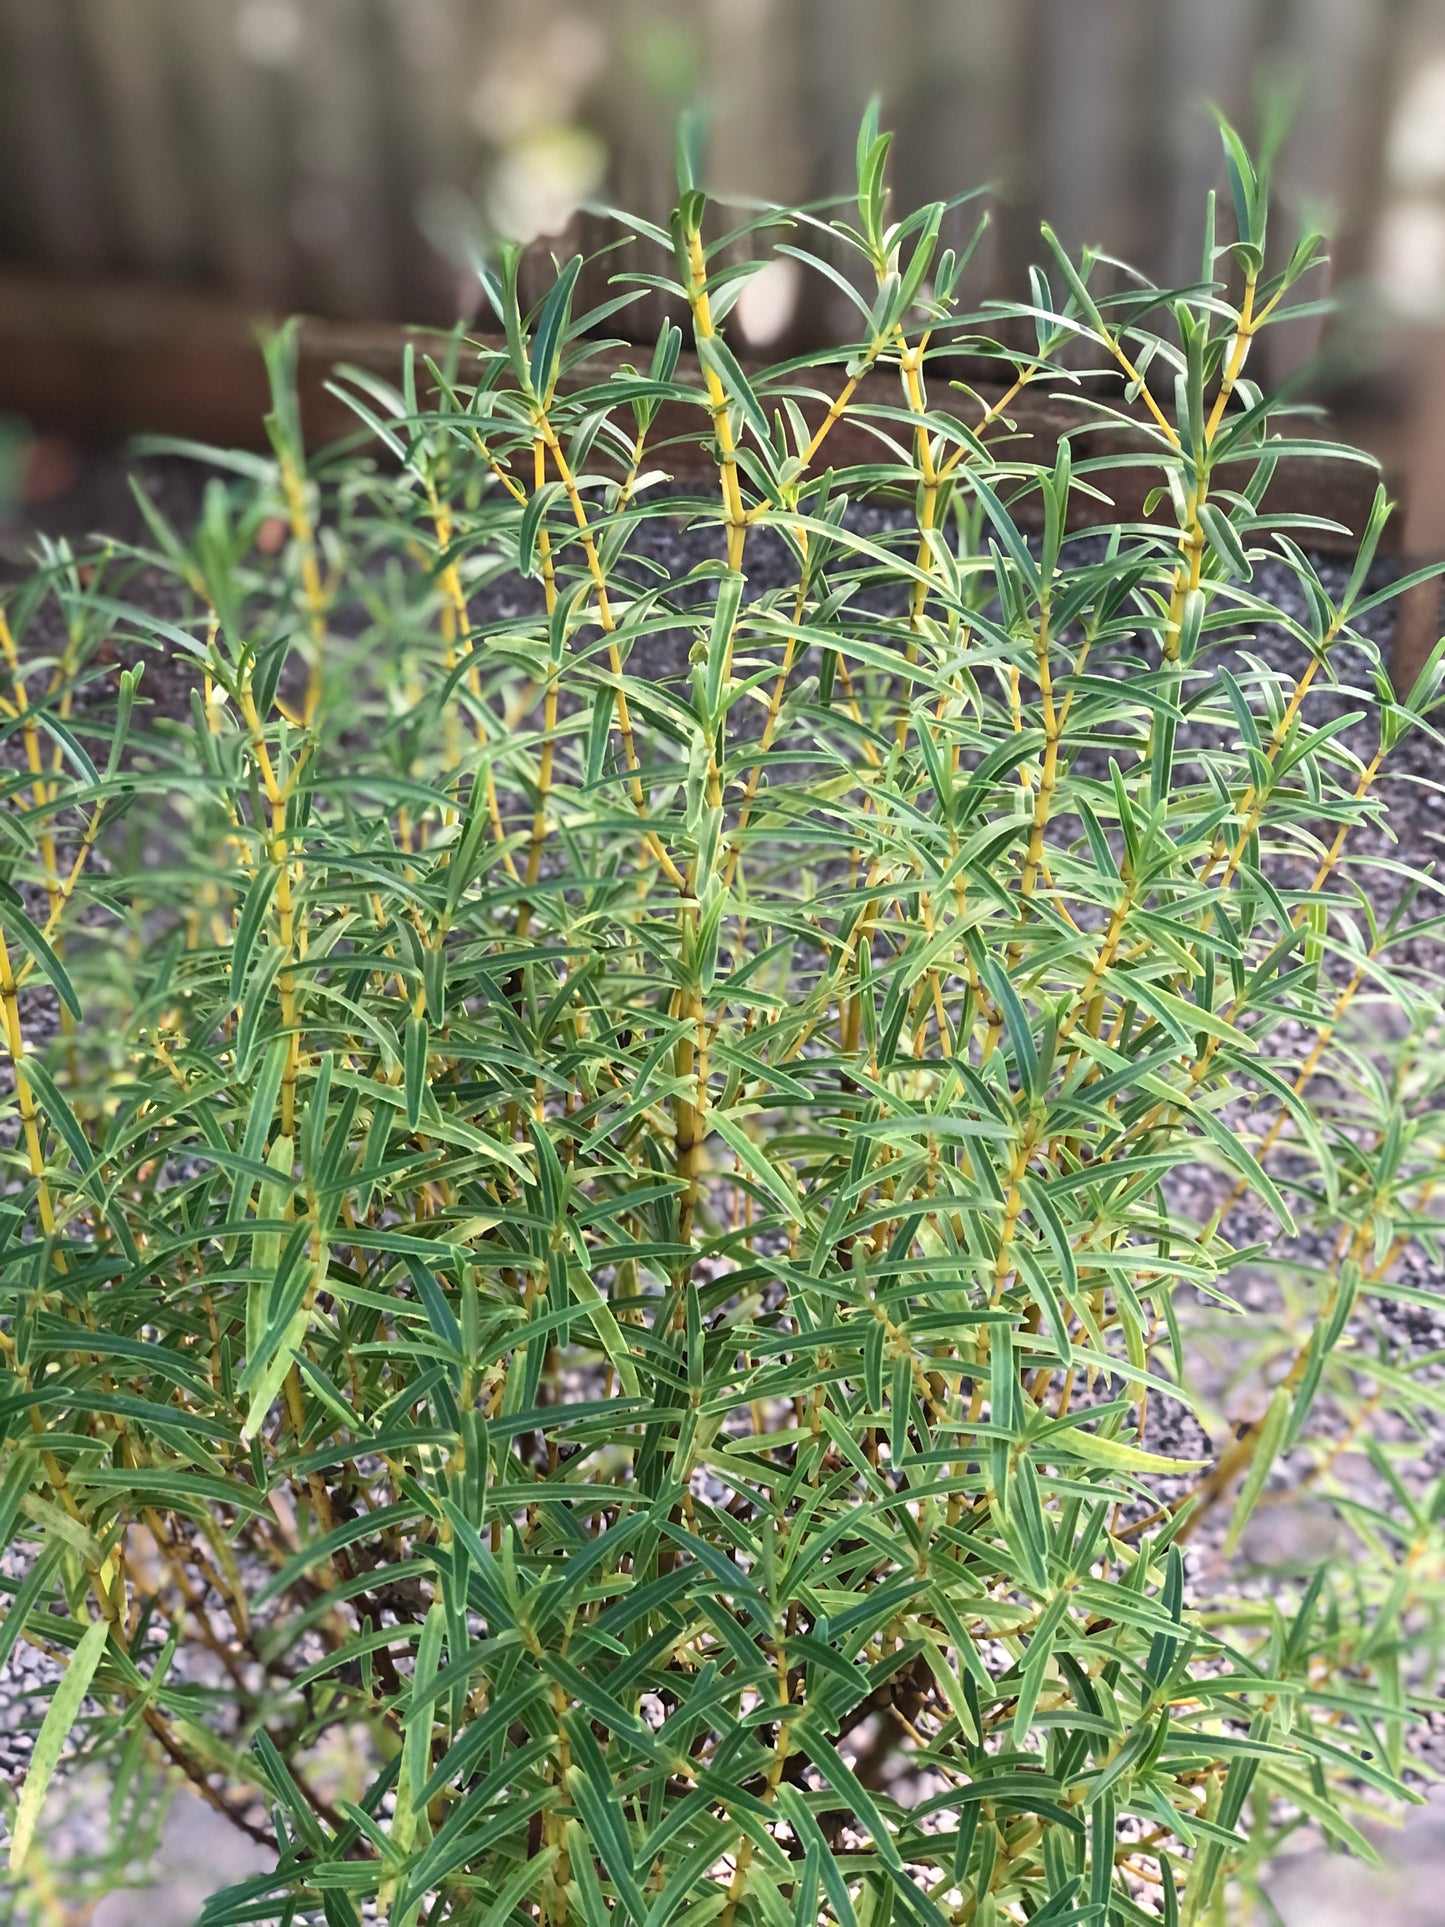 *RETAIL - Hebe salicifolia var. angustissima